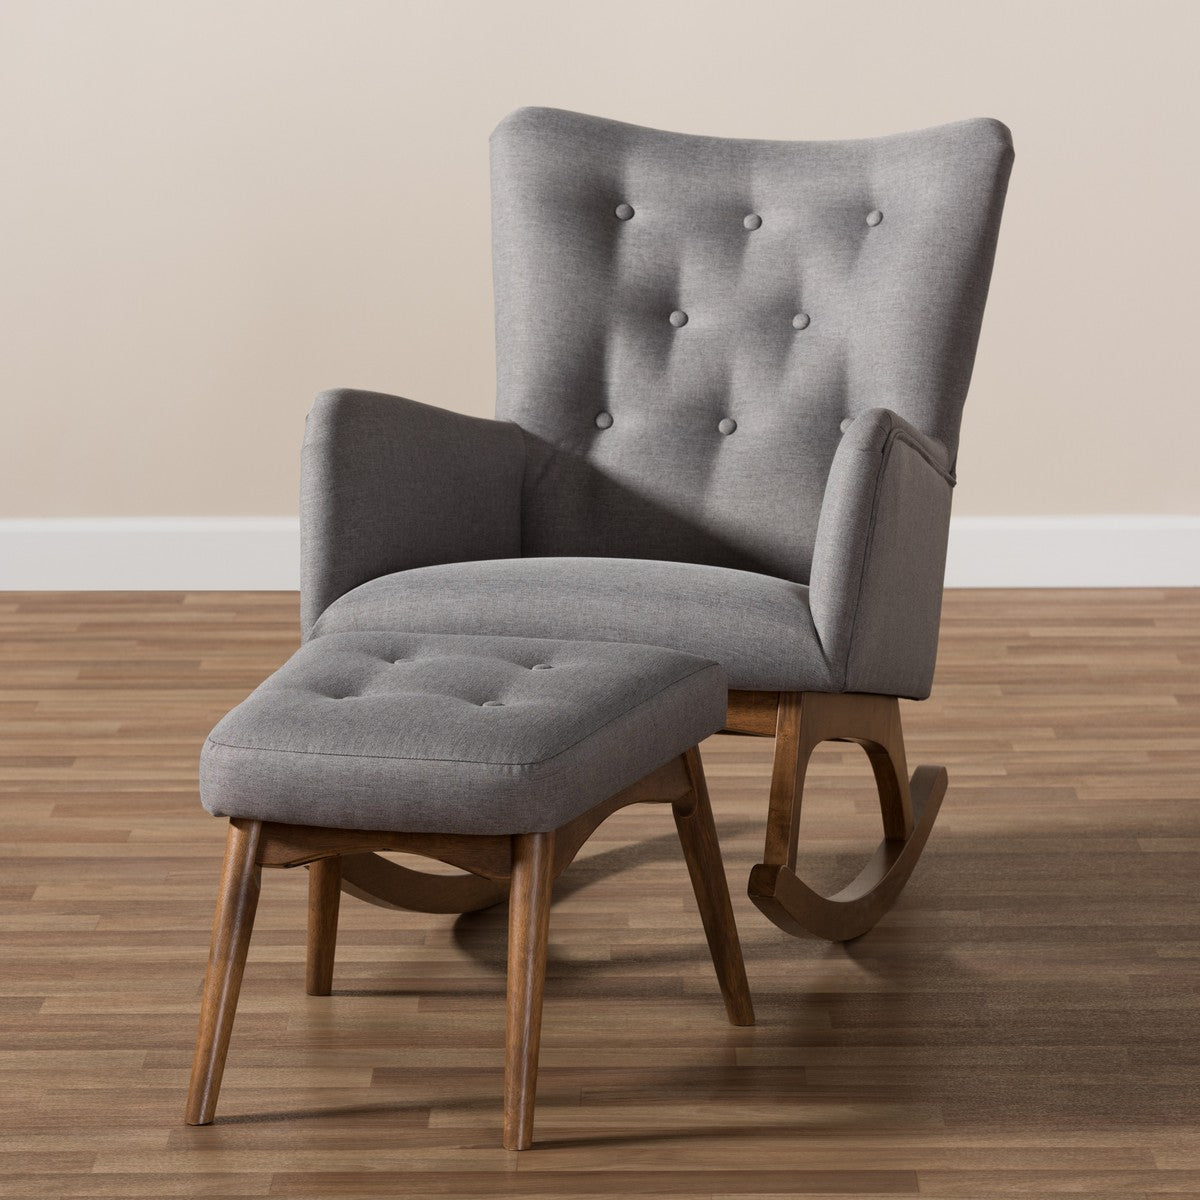 Baxton Studio Waldmann Mid-Century Modern Grey Fabric Upholstered Rocking Chair and Ottoman Set